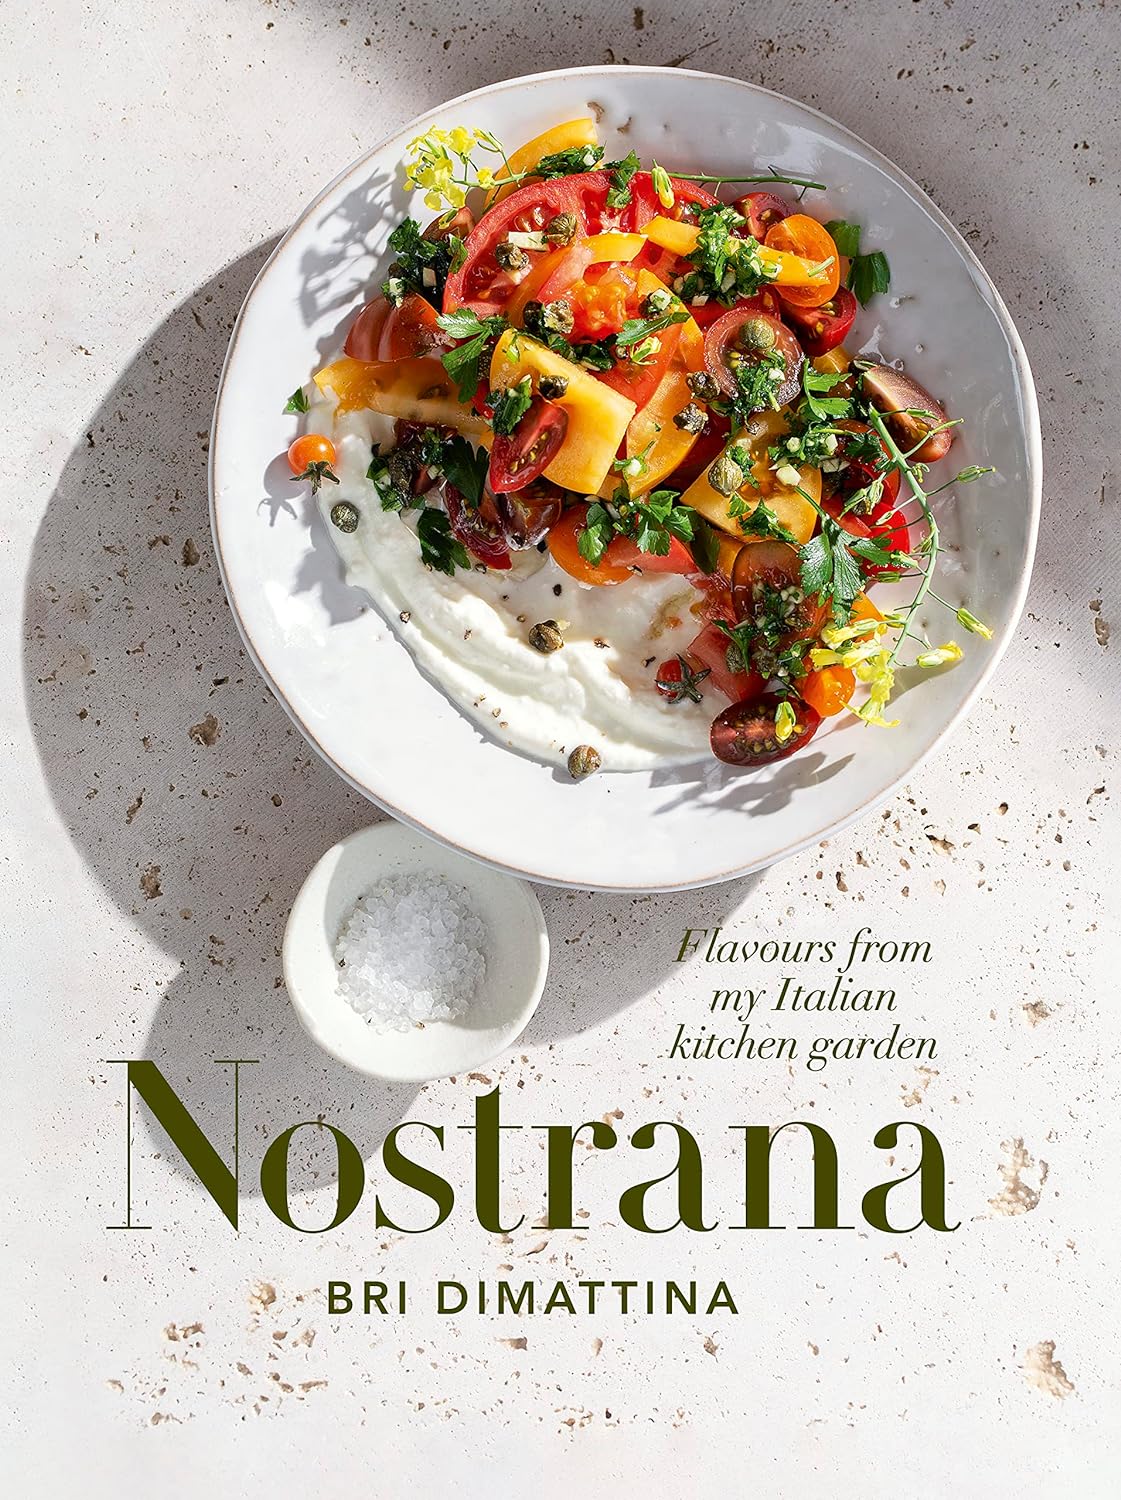 *Pre-order* Nostrana: Flavours from my Italian kitchen garden (Bri DiMattina)